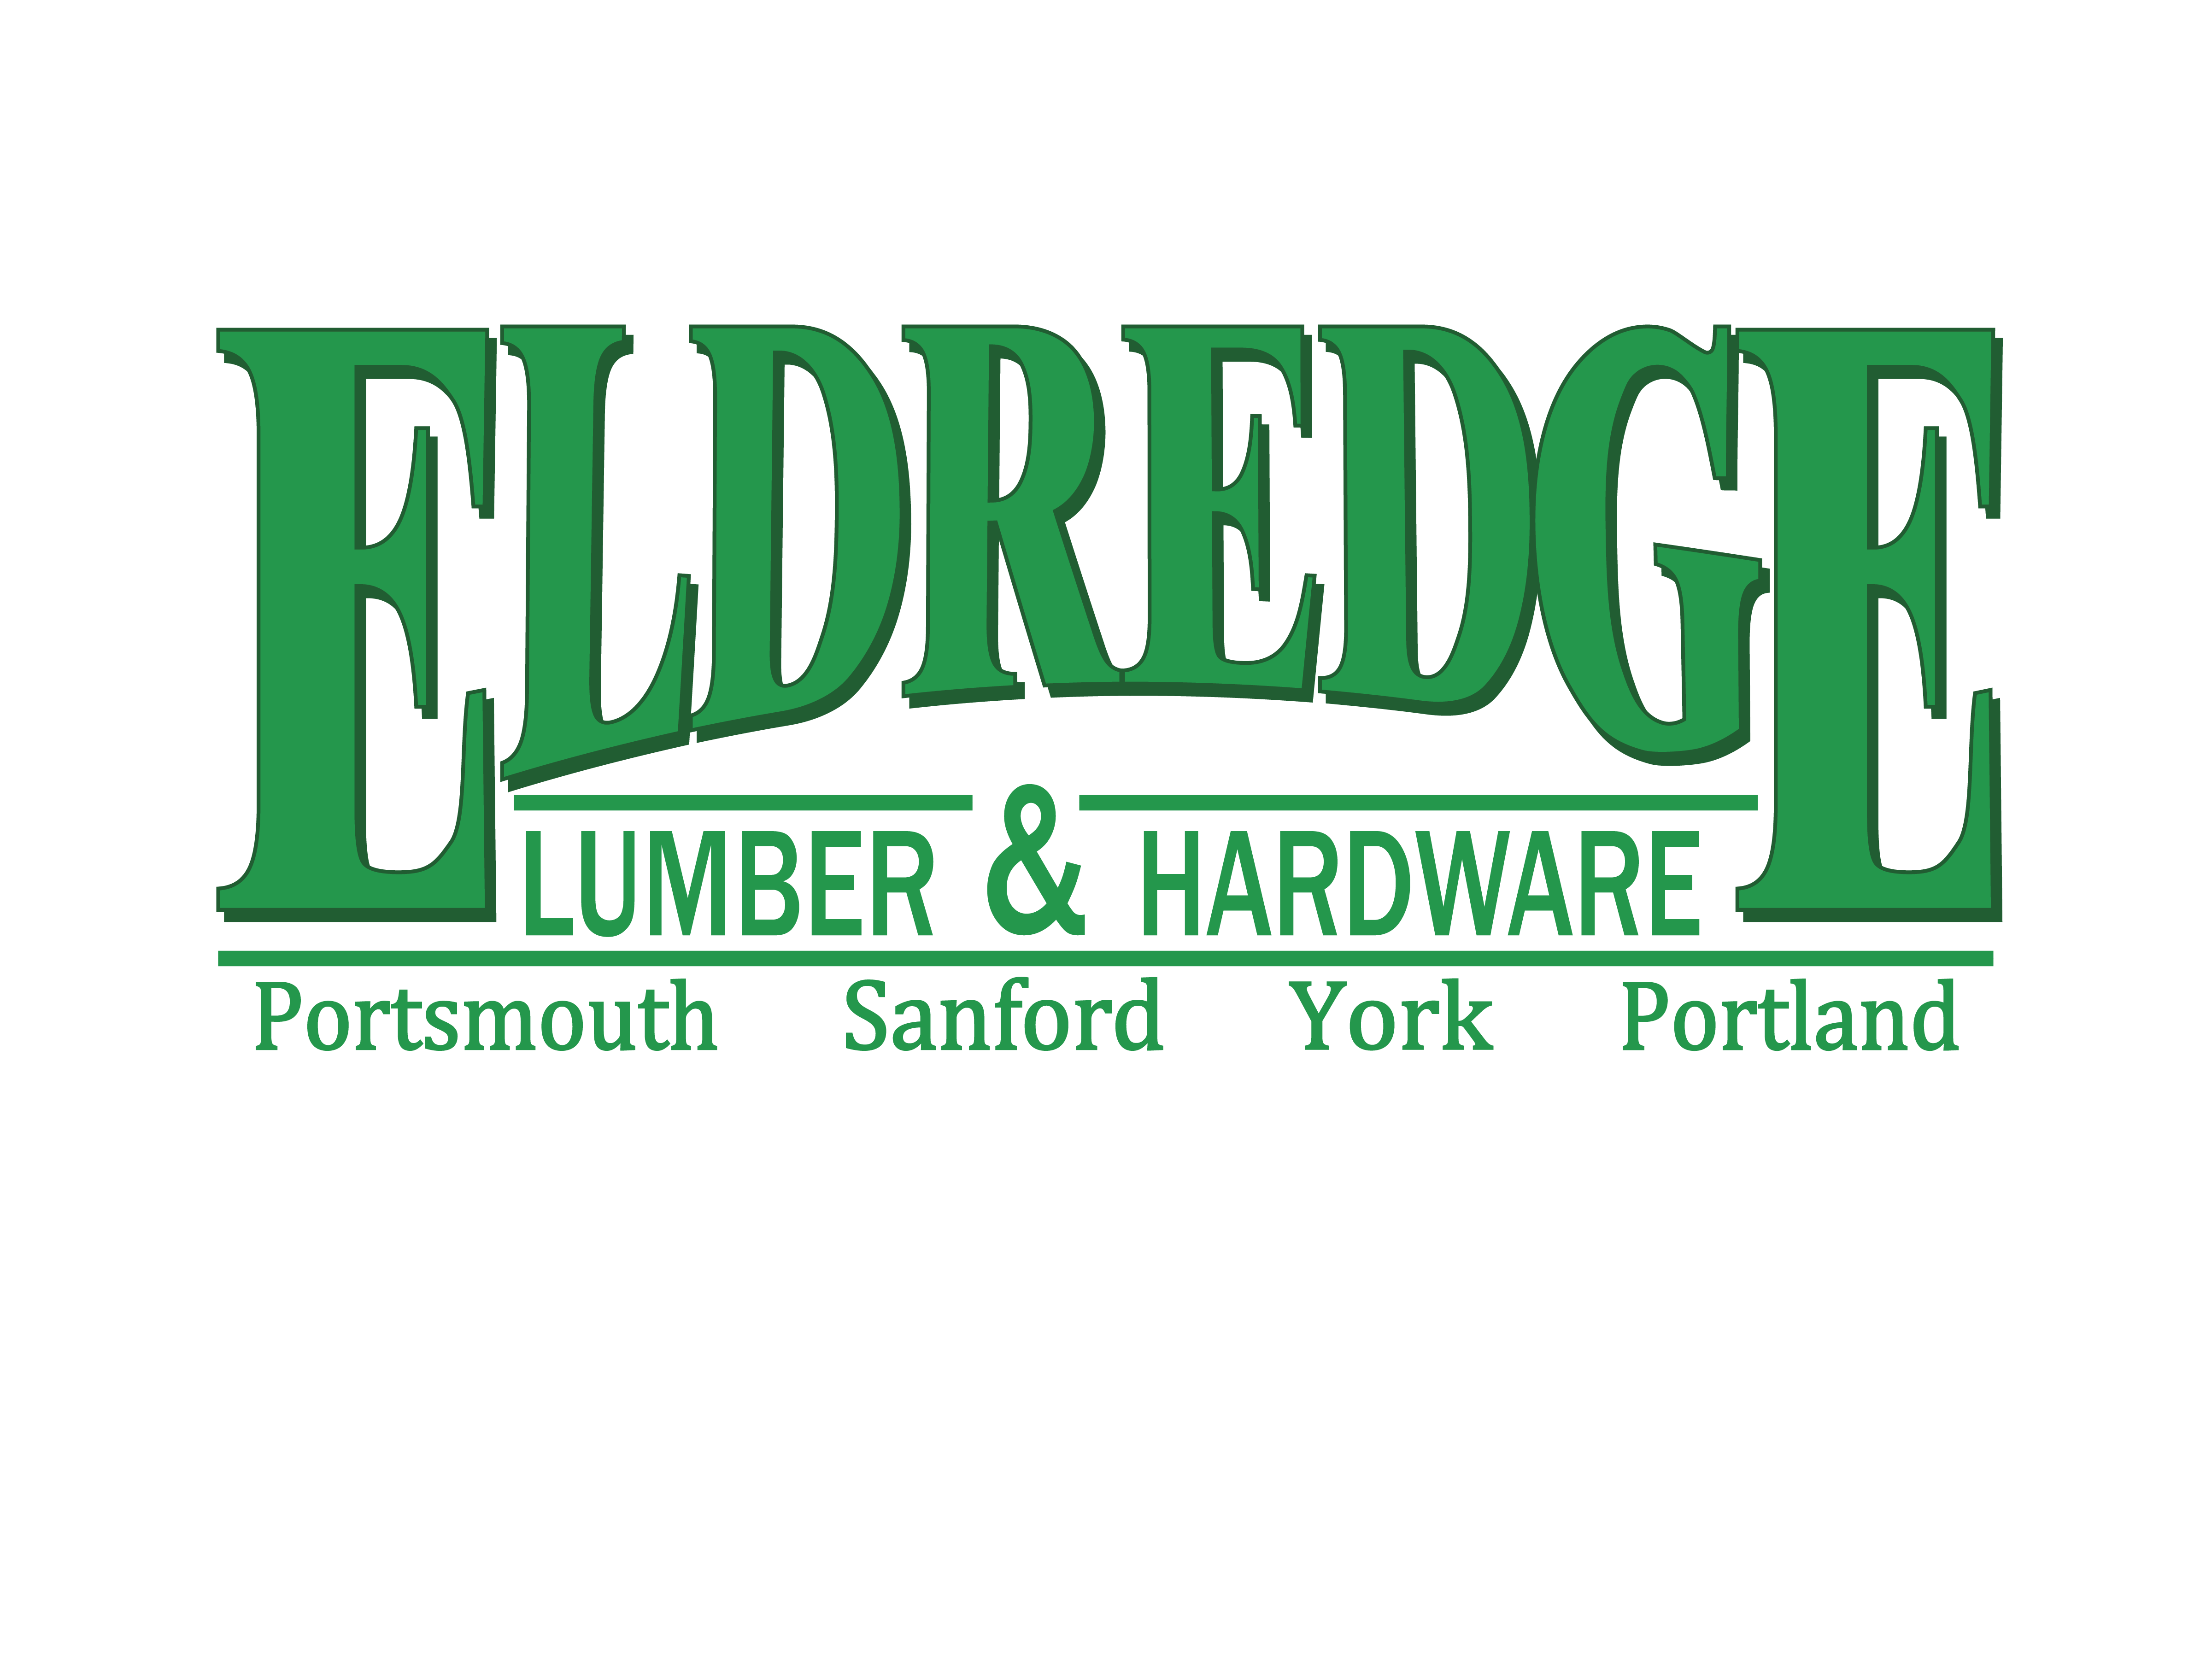 Eldredge Lumber